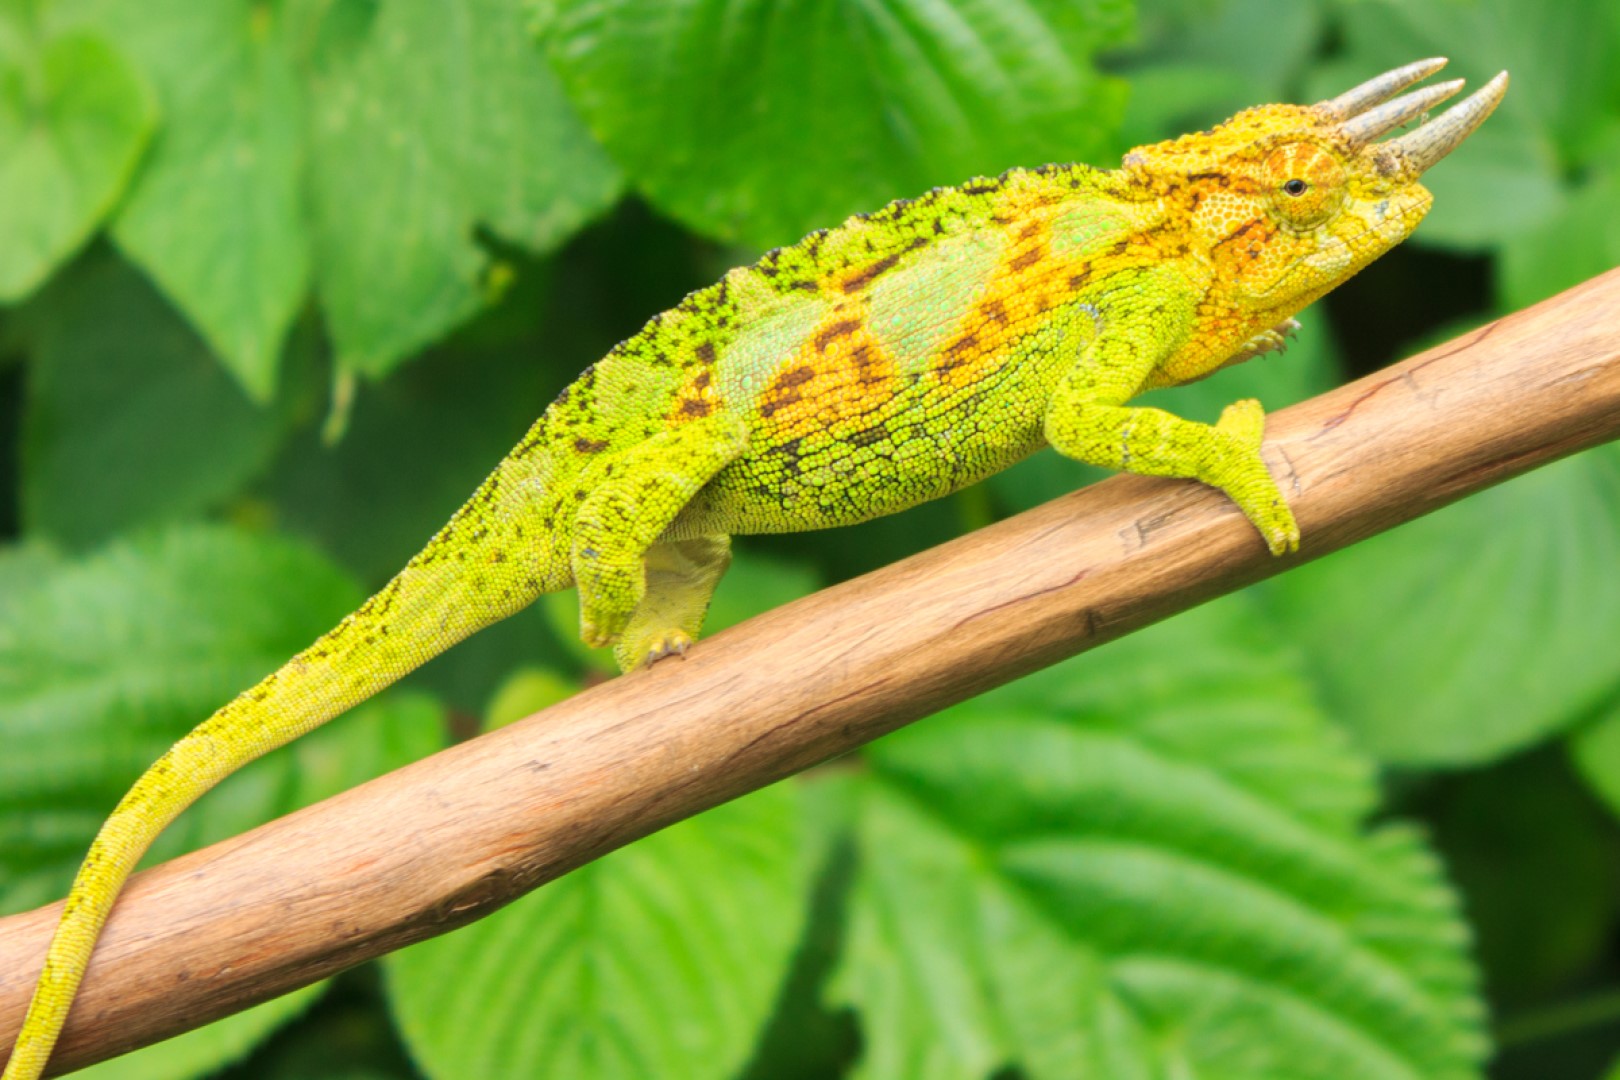 The three-horned chameleon, popularly found around Rwenzori Mountains.